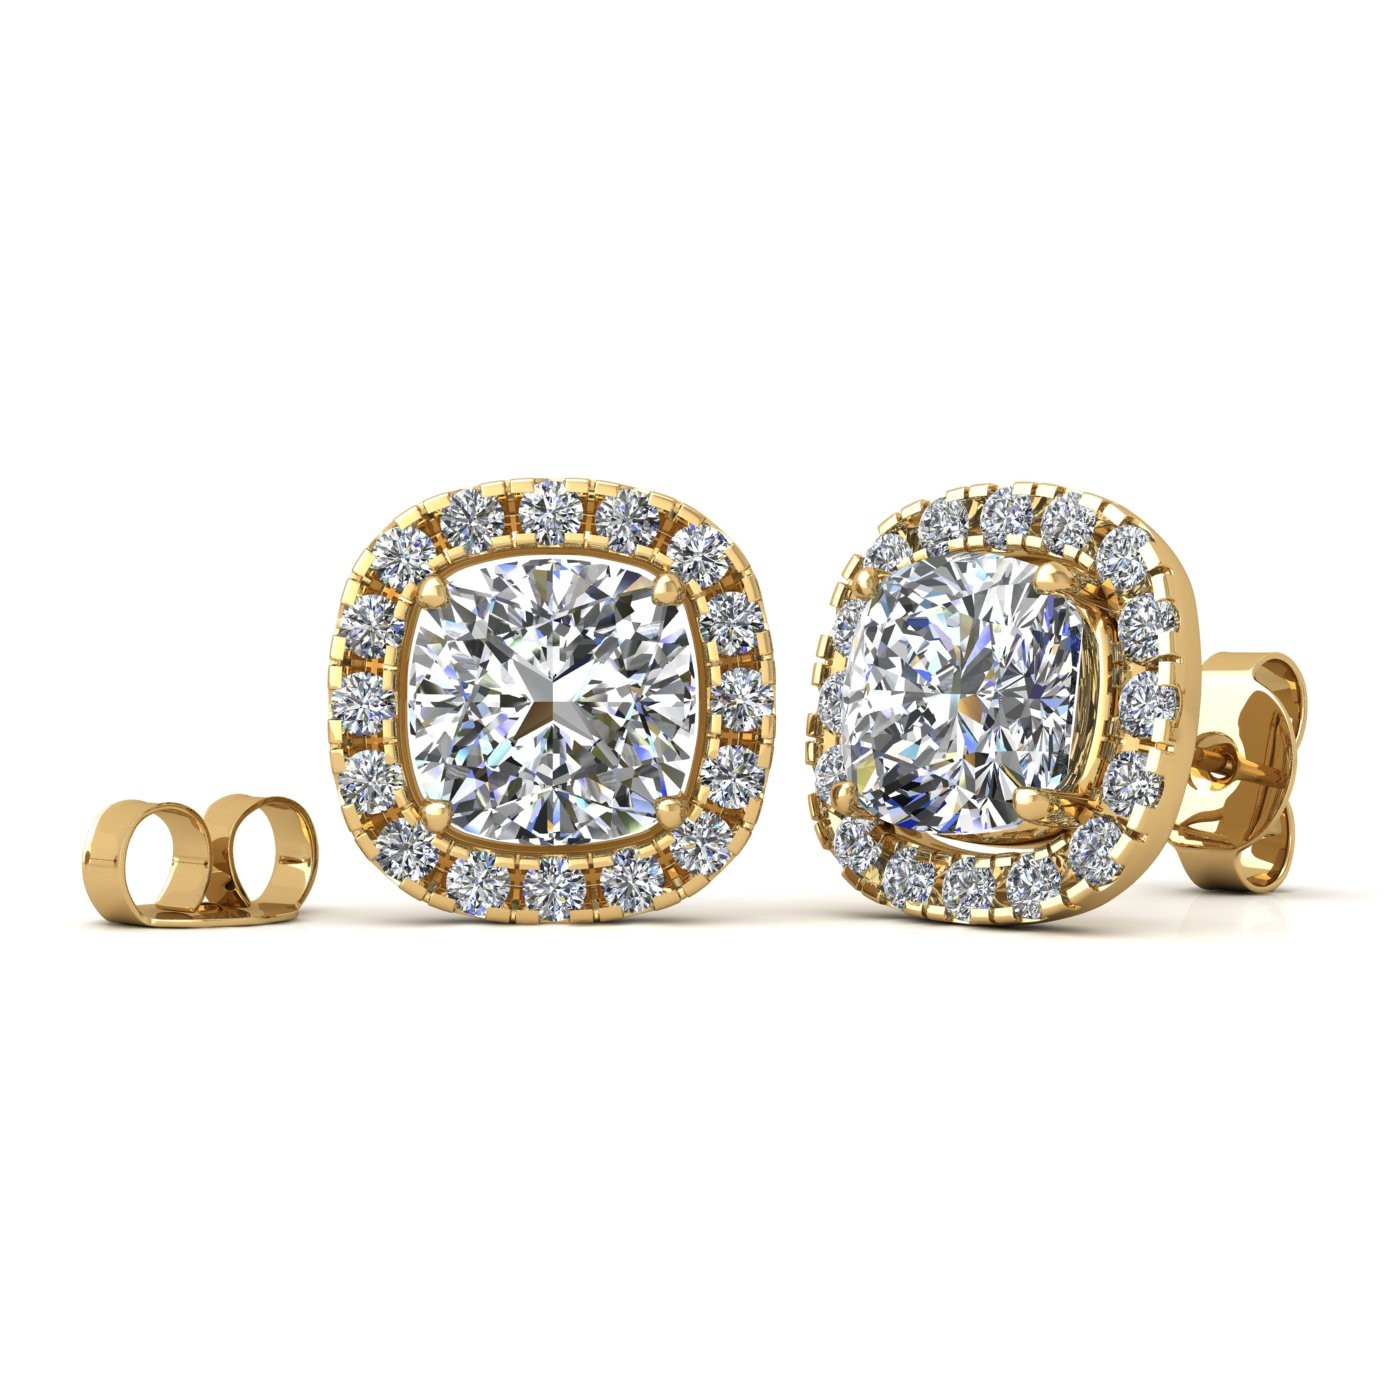 18k yellow gold  1,2 ct each (2,4 tcw) 4 prongs cushion shape diamond earrings with diamond pavÉ set halo